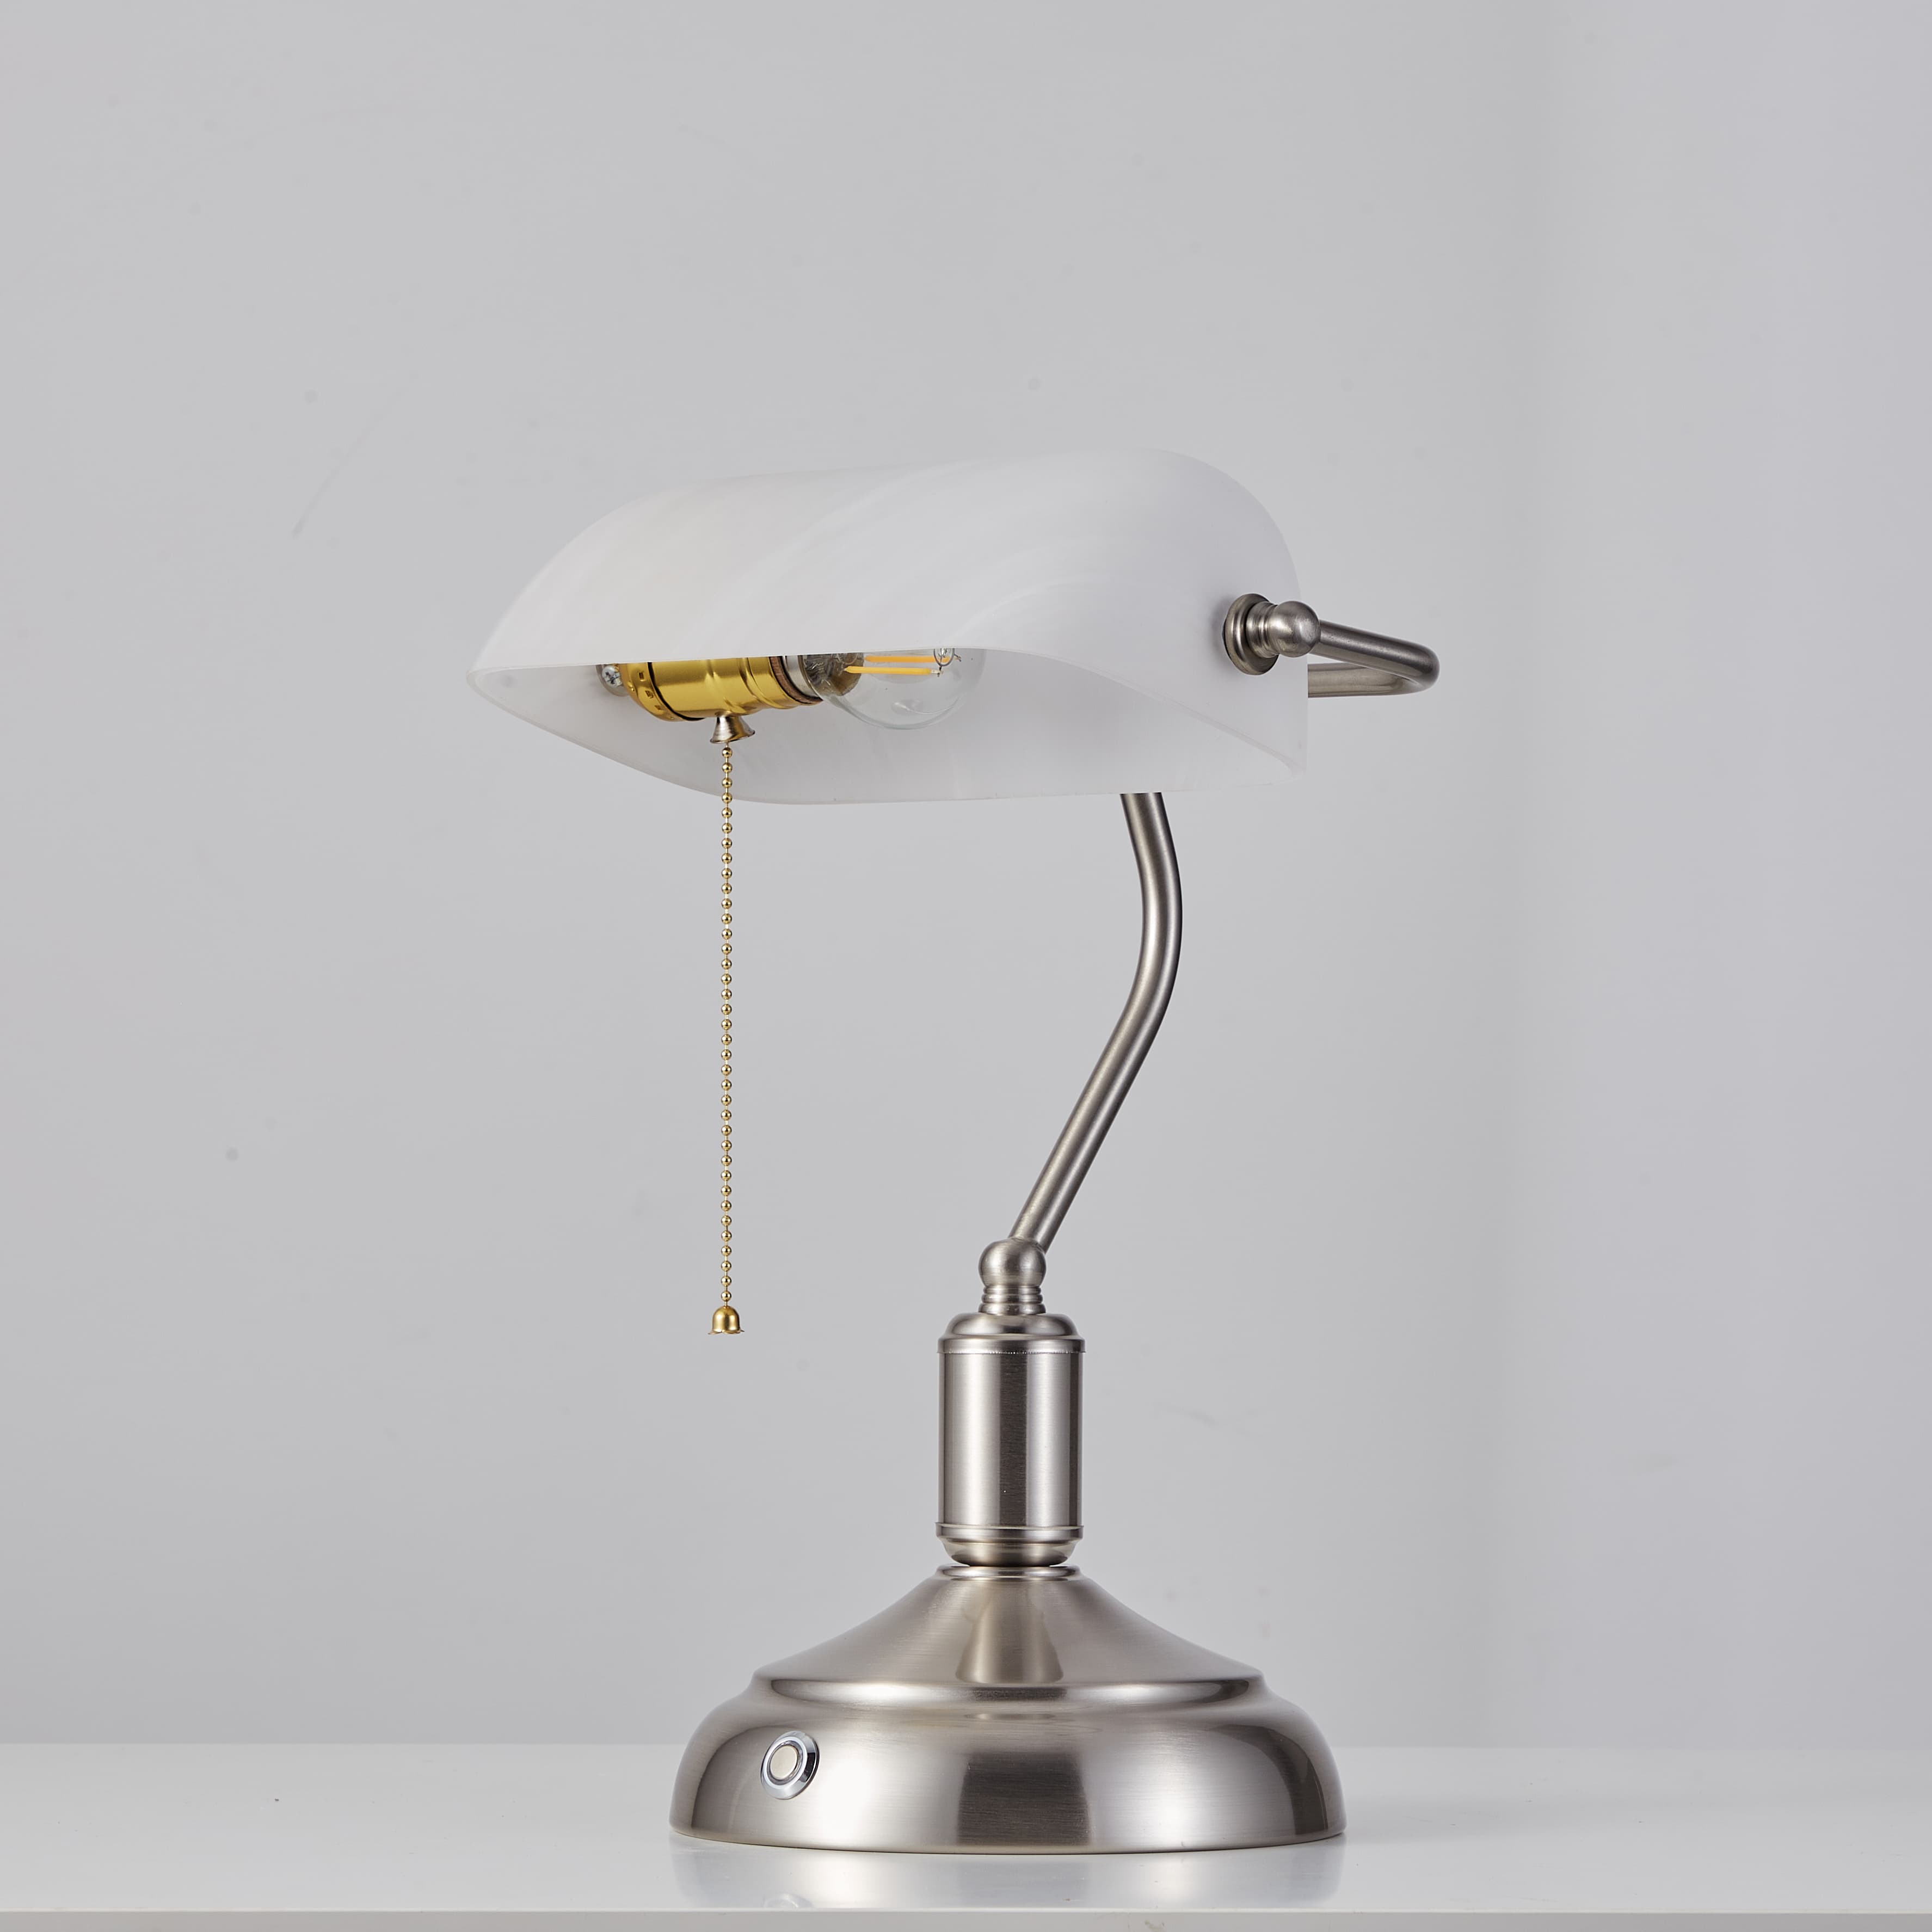 Lampe de banquier rechargeable avec abat-jour en verre blanc - Nickel brossé